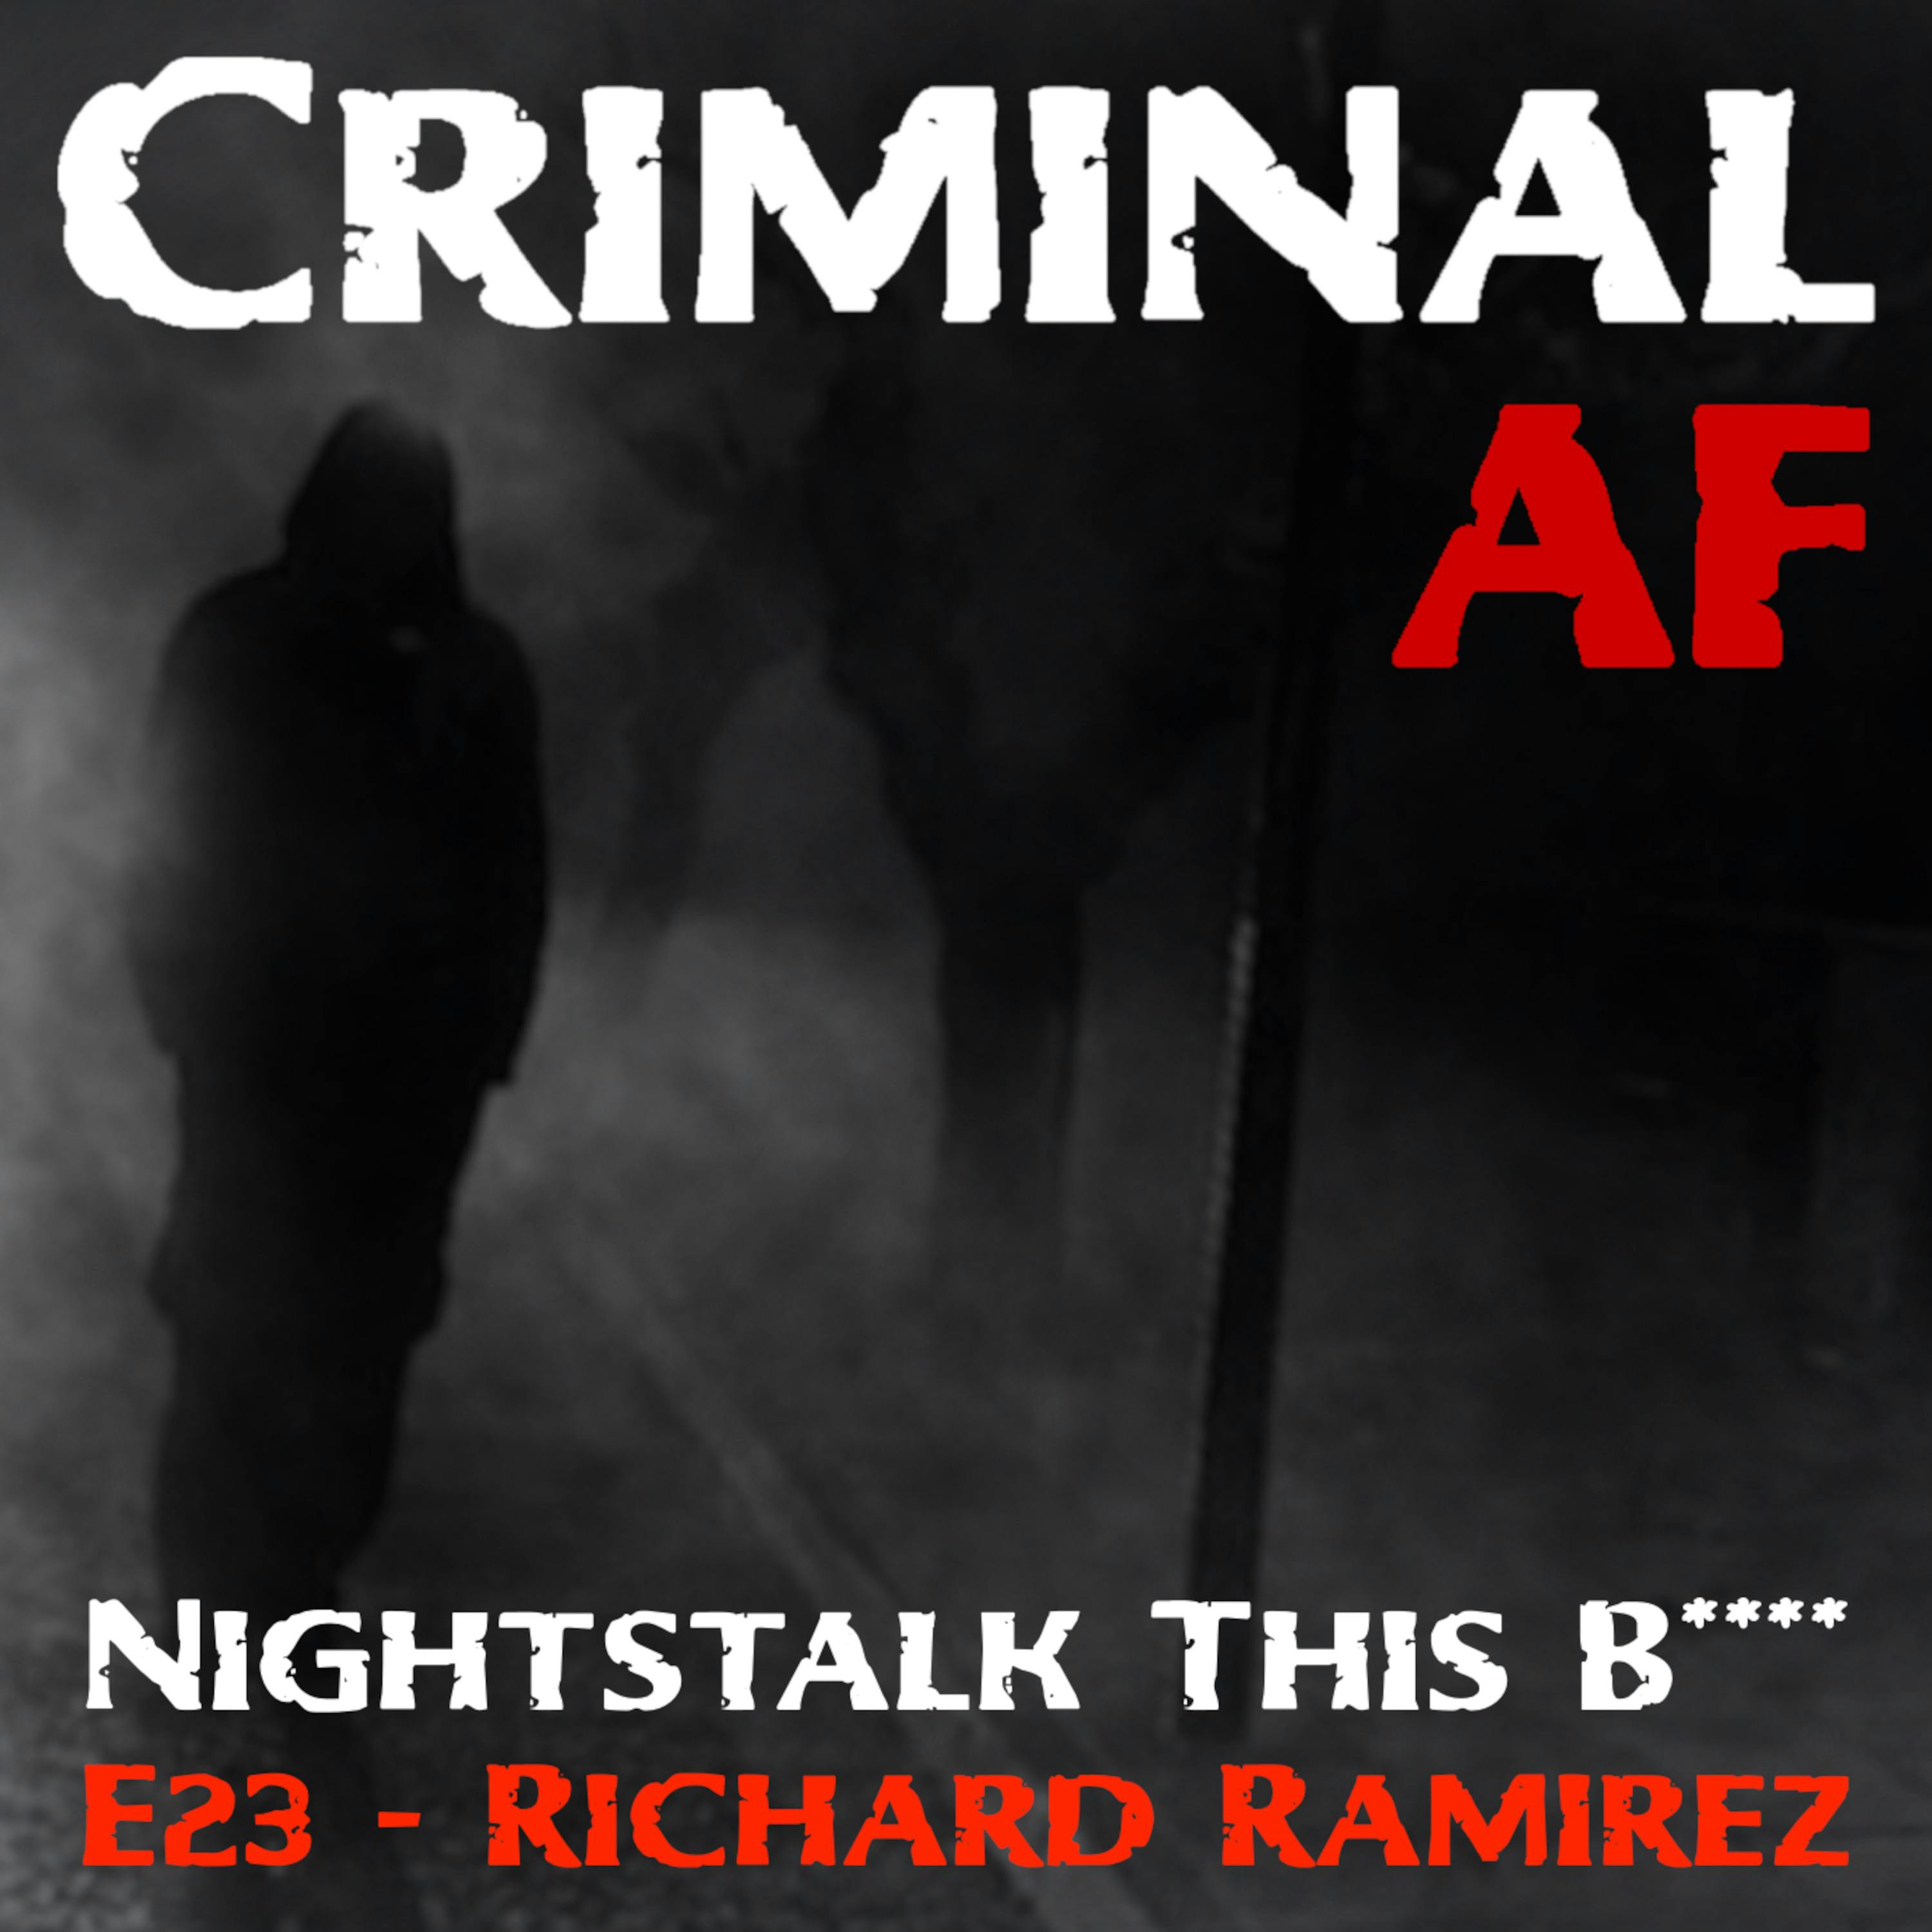 Nightstalk THIS B****!!! - Richard Ramirez - E23